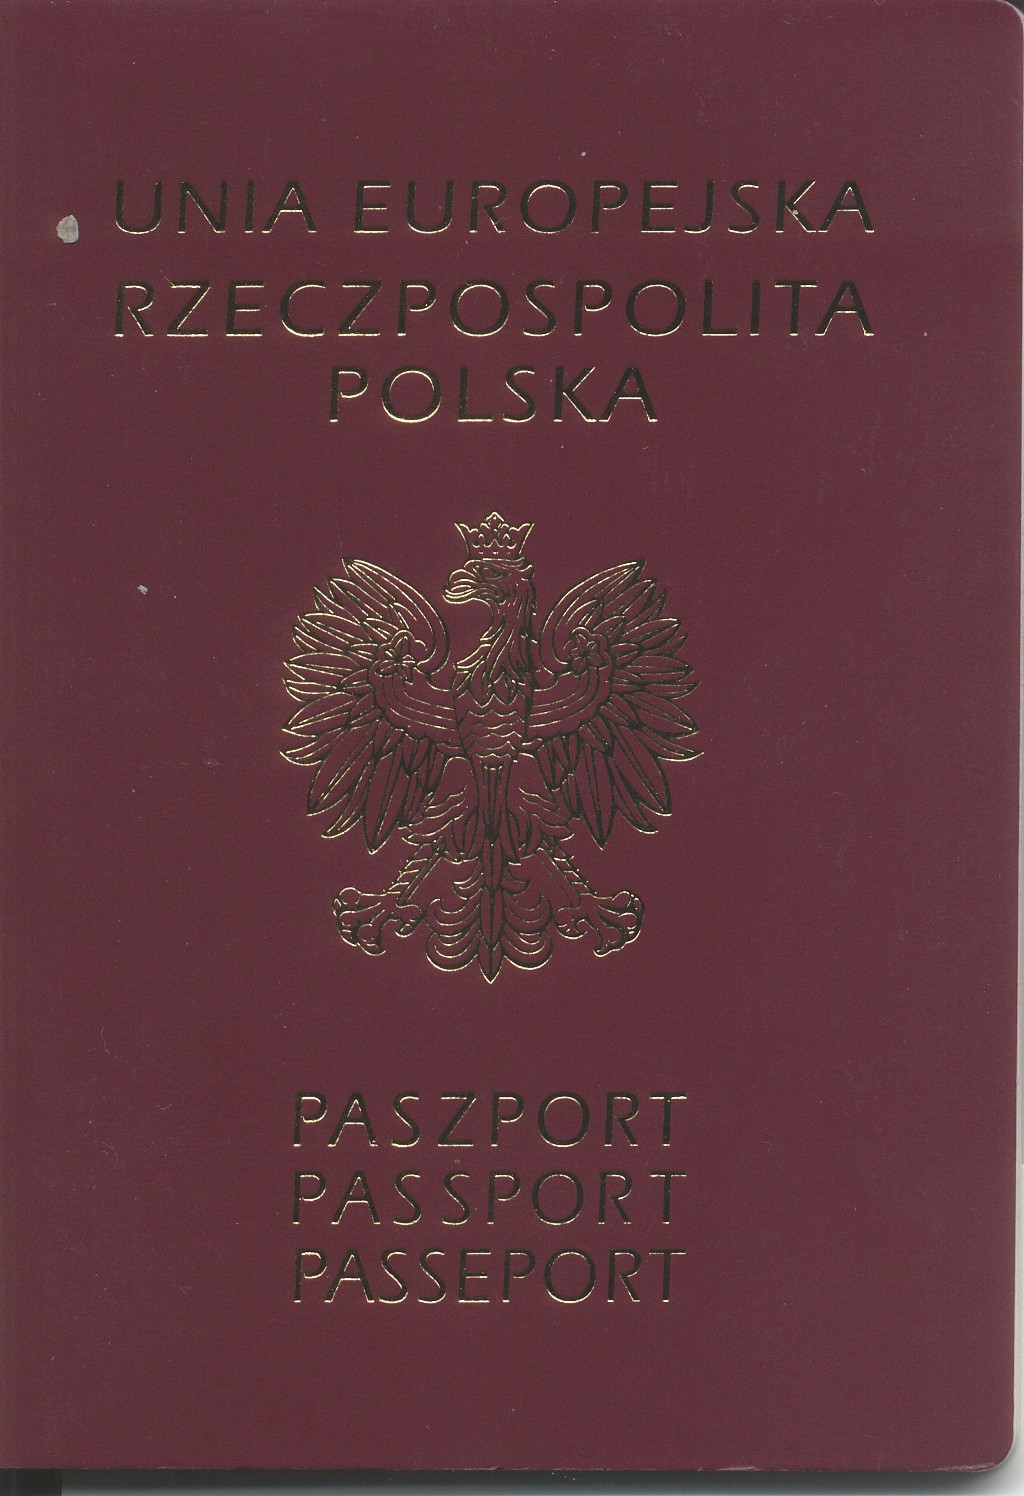 http://dic.academic.ru/pictures/wiki/files/80/Pl_Passport_new.jpg